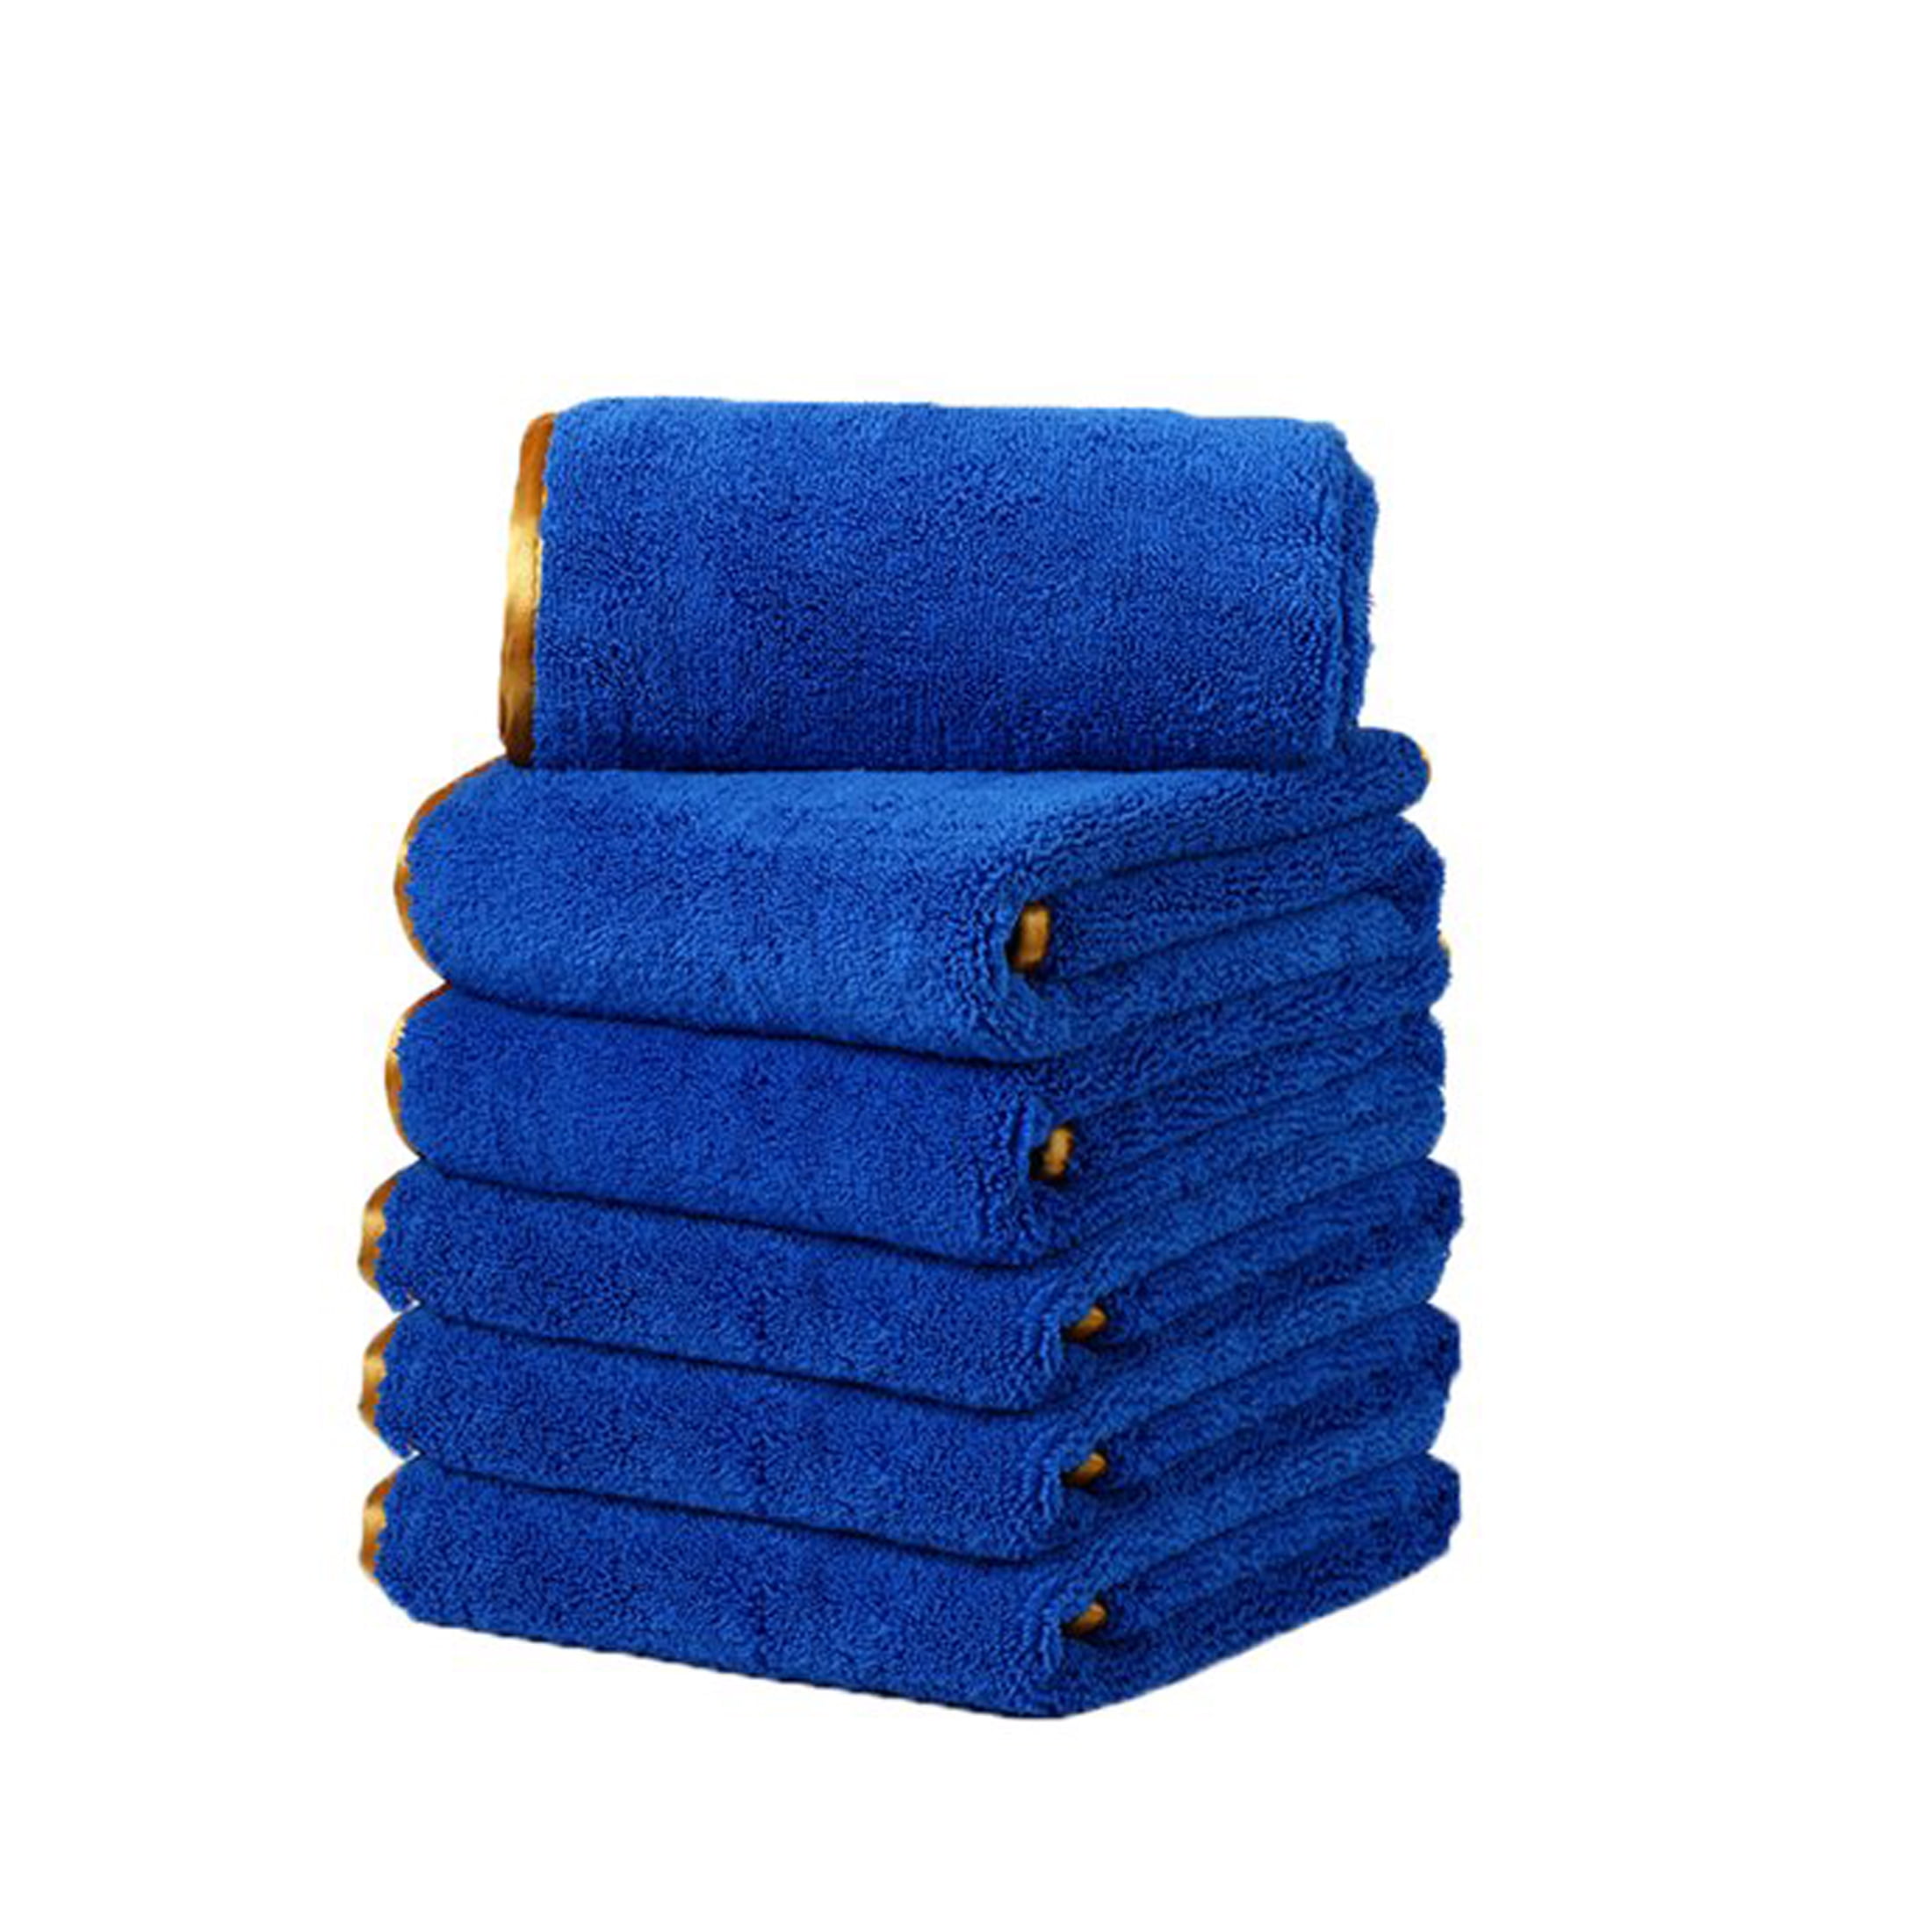 Large Microfiber Cleaning Cloth Wash Towel Drying Rag Polishing Deta_HOT C2E3 